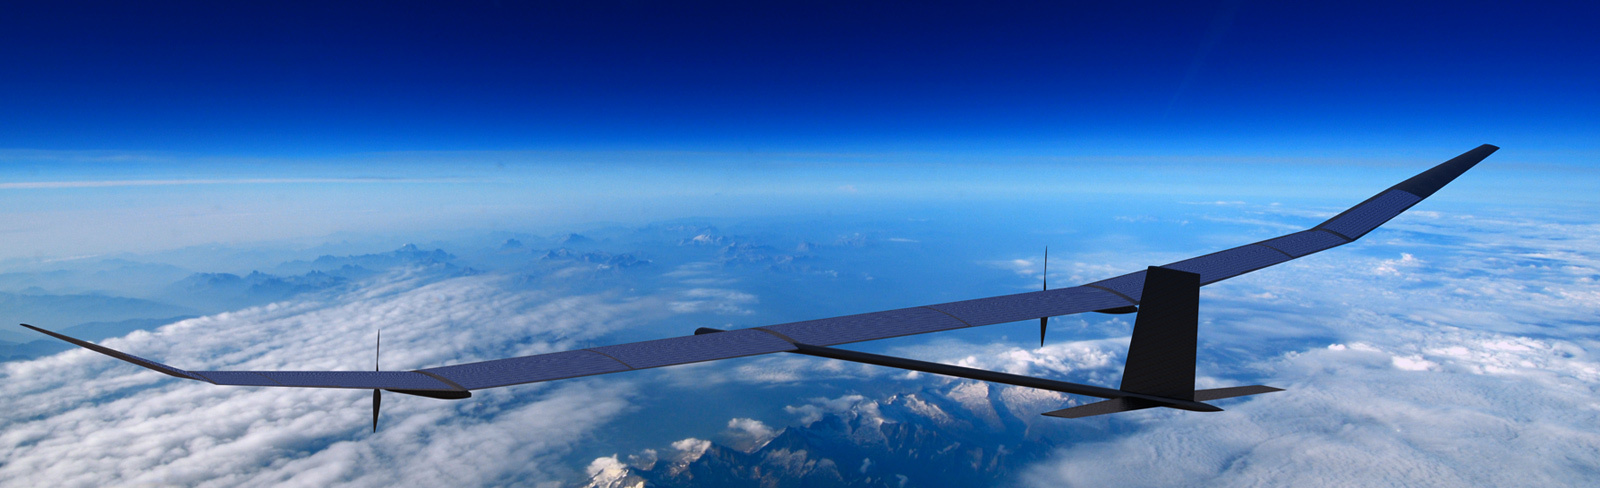 Image showing Phasa-35 solar powered aircraft